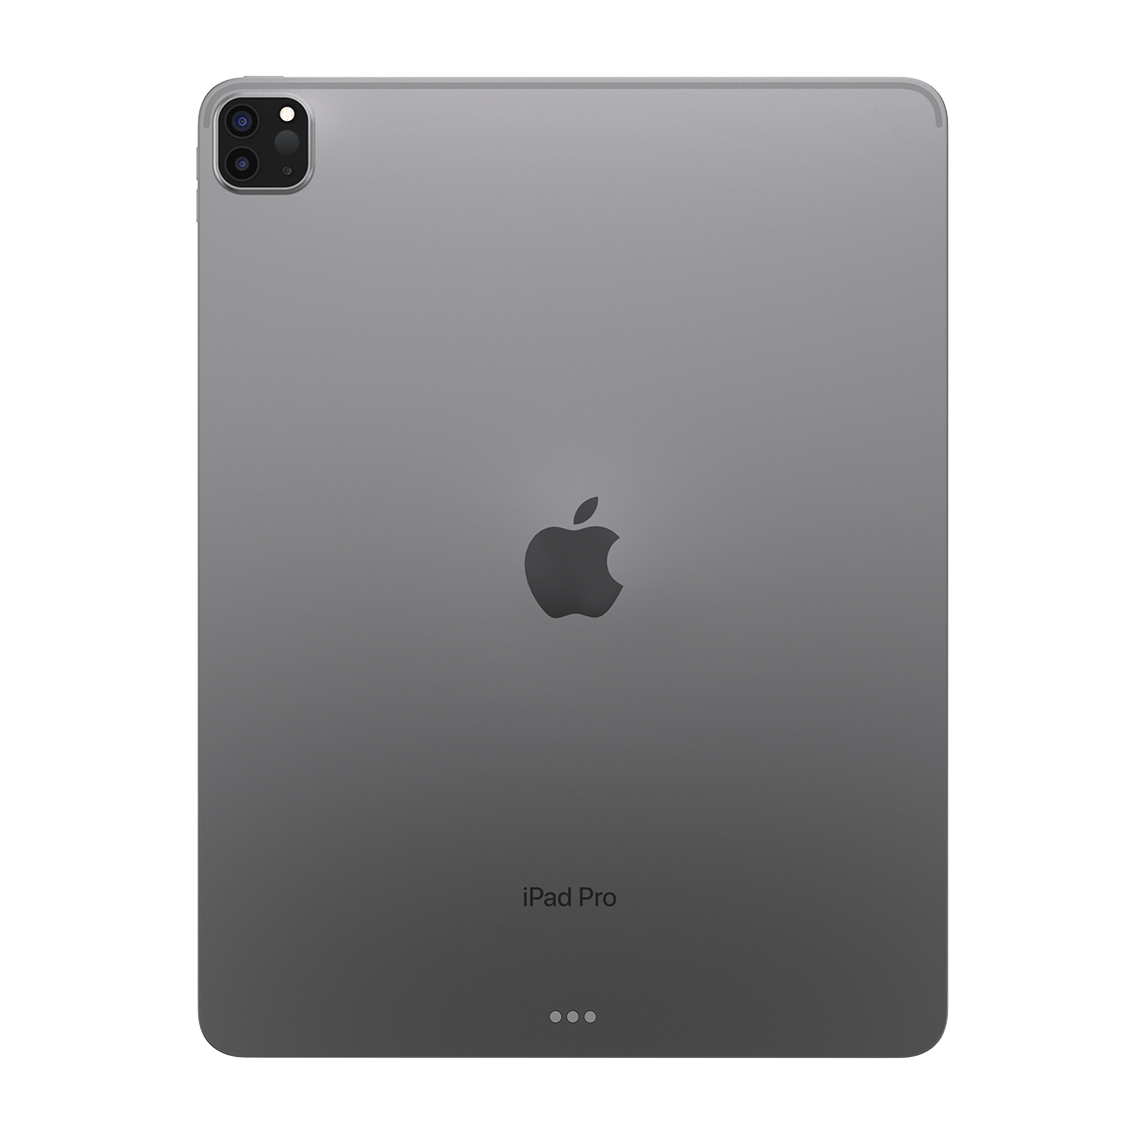 Apple iPad Pro 12.9-inch 6th Generation - Space Gray - 512GB, Wi-Fi + Cellular, Grade A